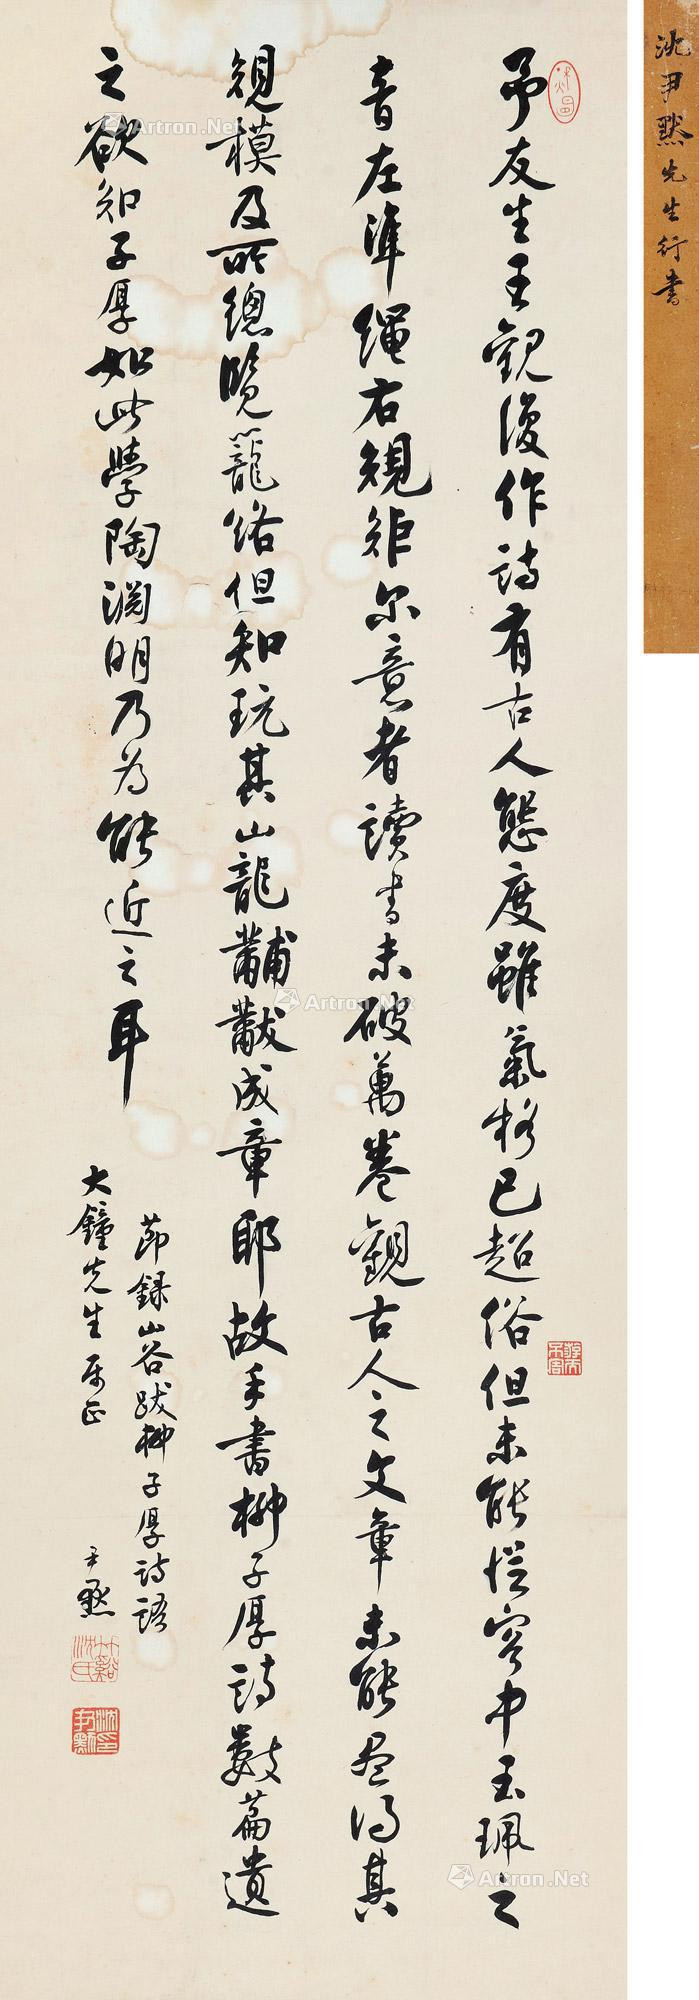 Calligraphy in Cursive Script -Poem by Huang Tingjian